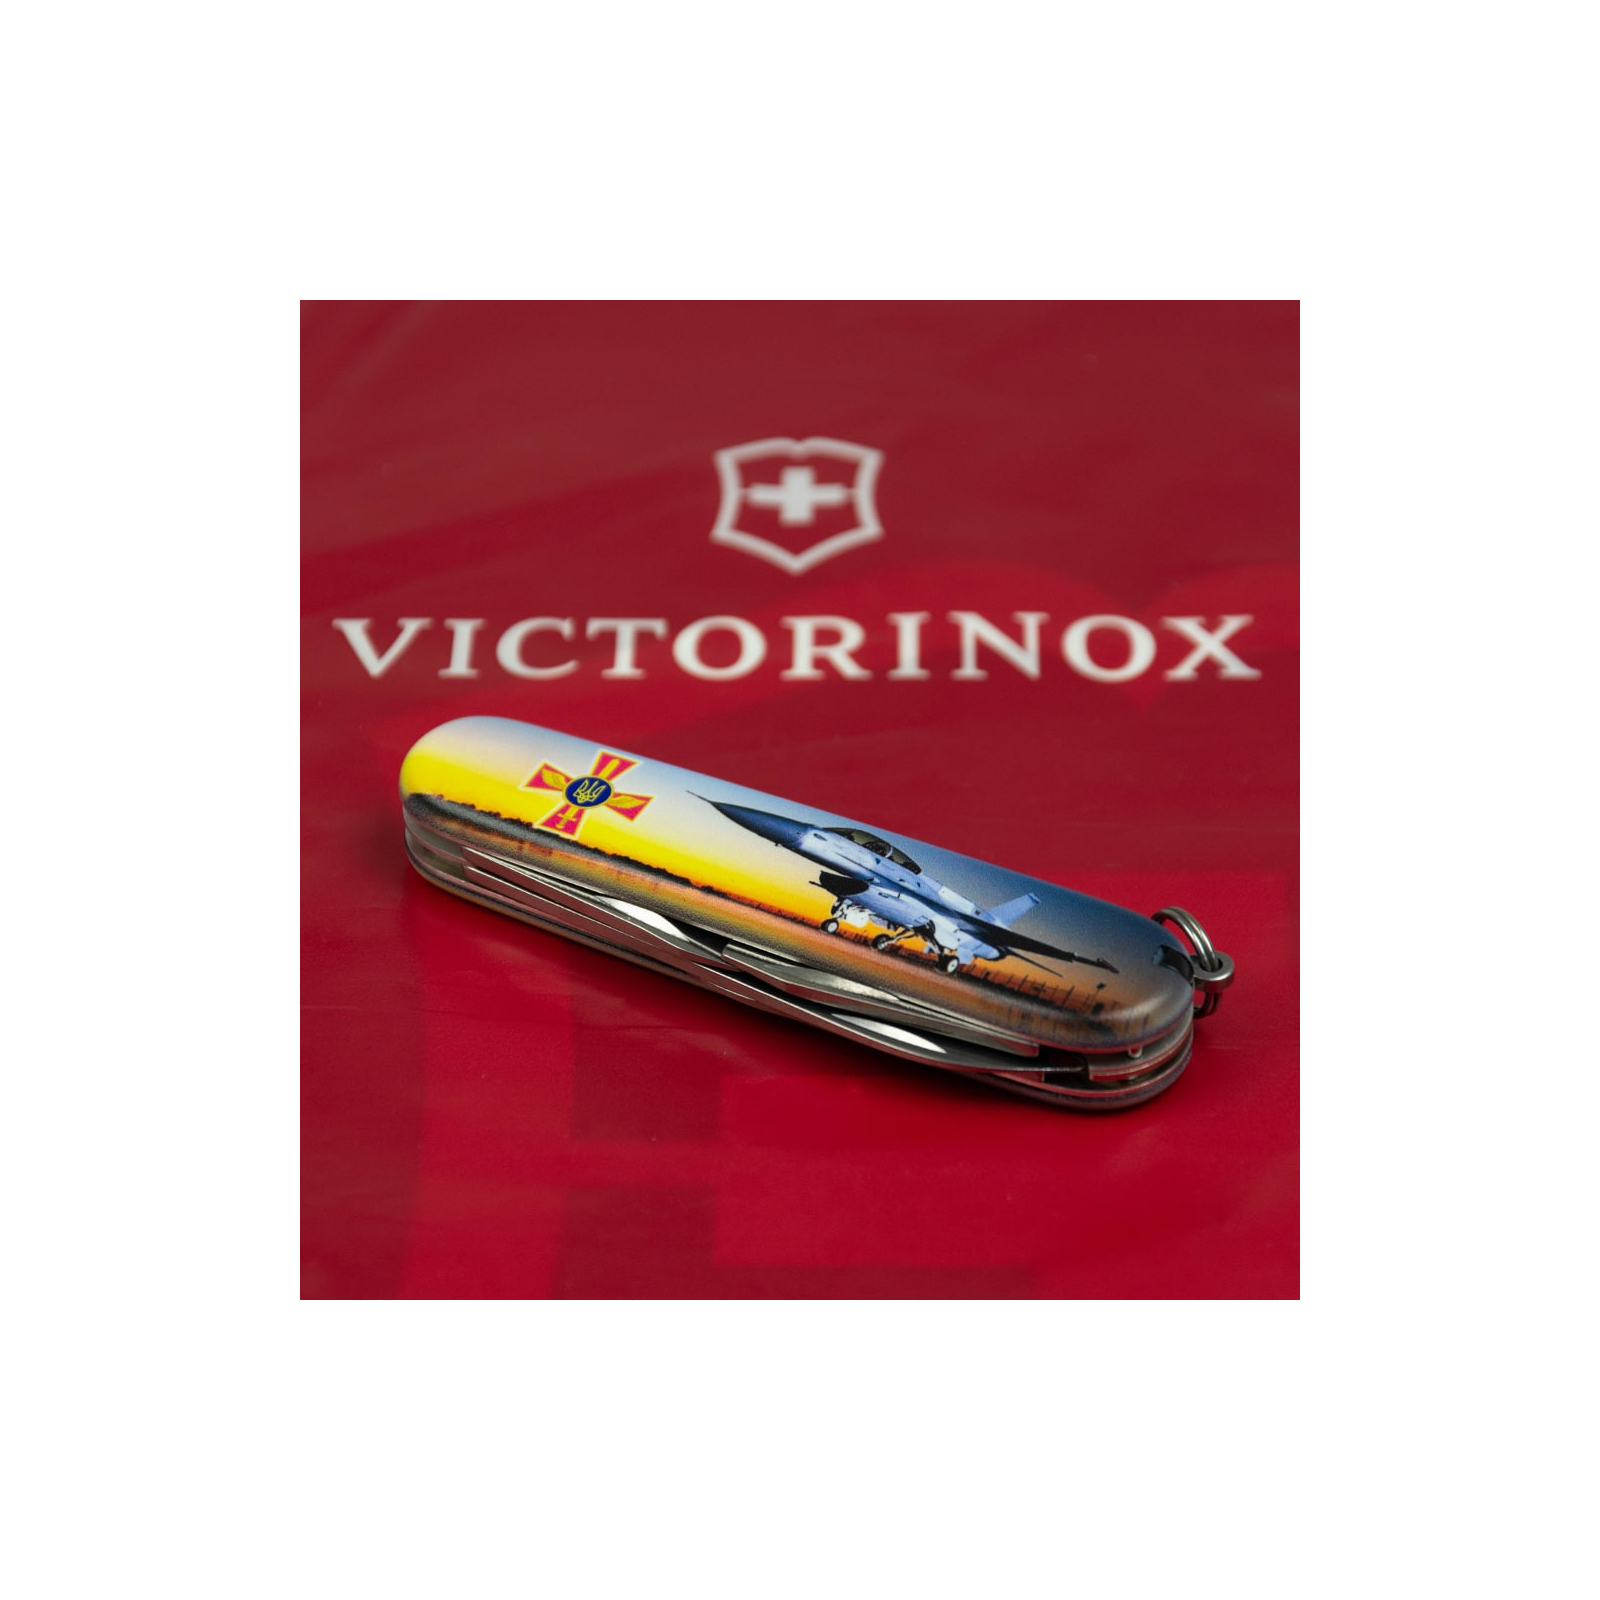 Нож Victorinox Spartan Army 91 мм Літак + Емблема ПС ЗСУ (1.3603.3_W3040p) изображение 3